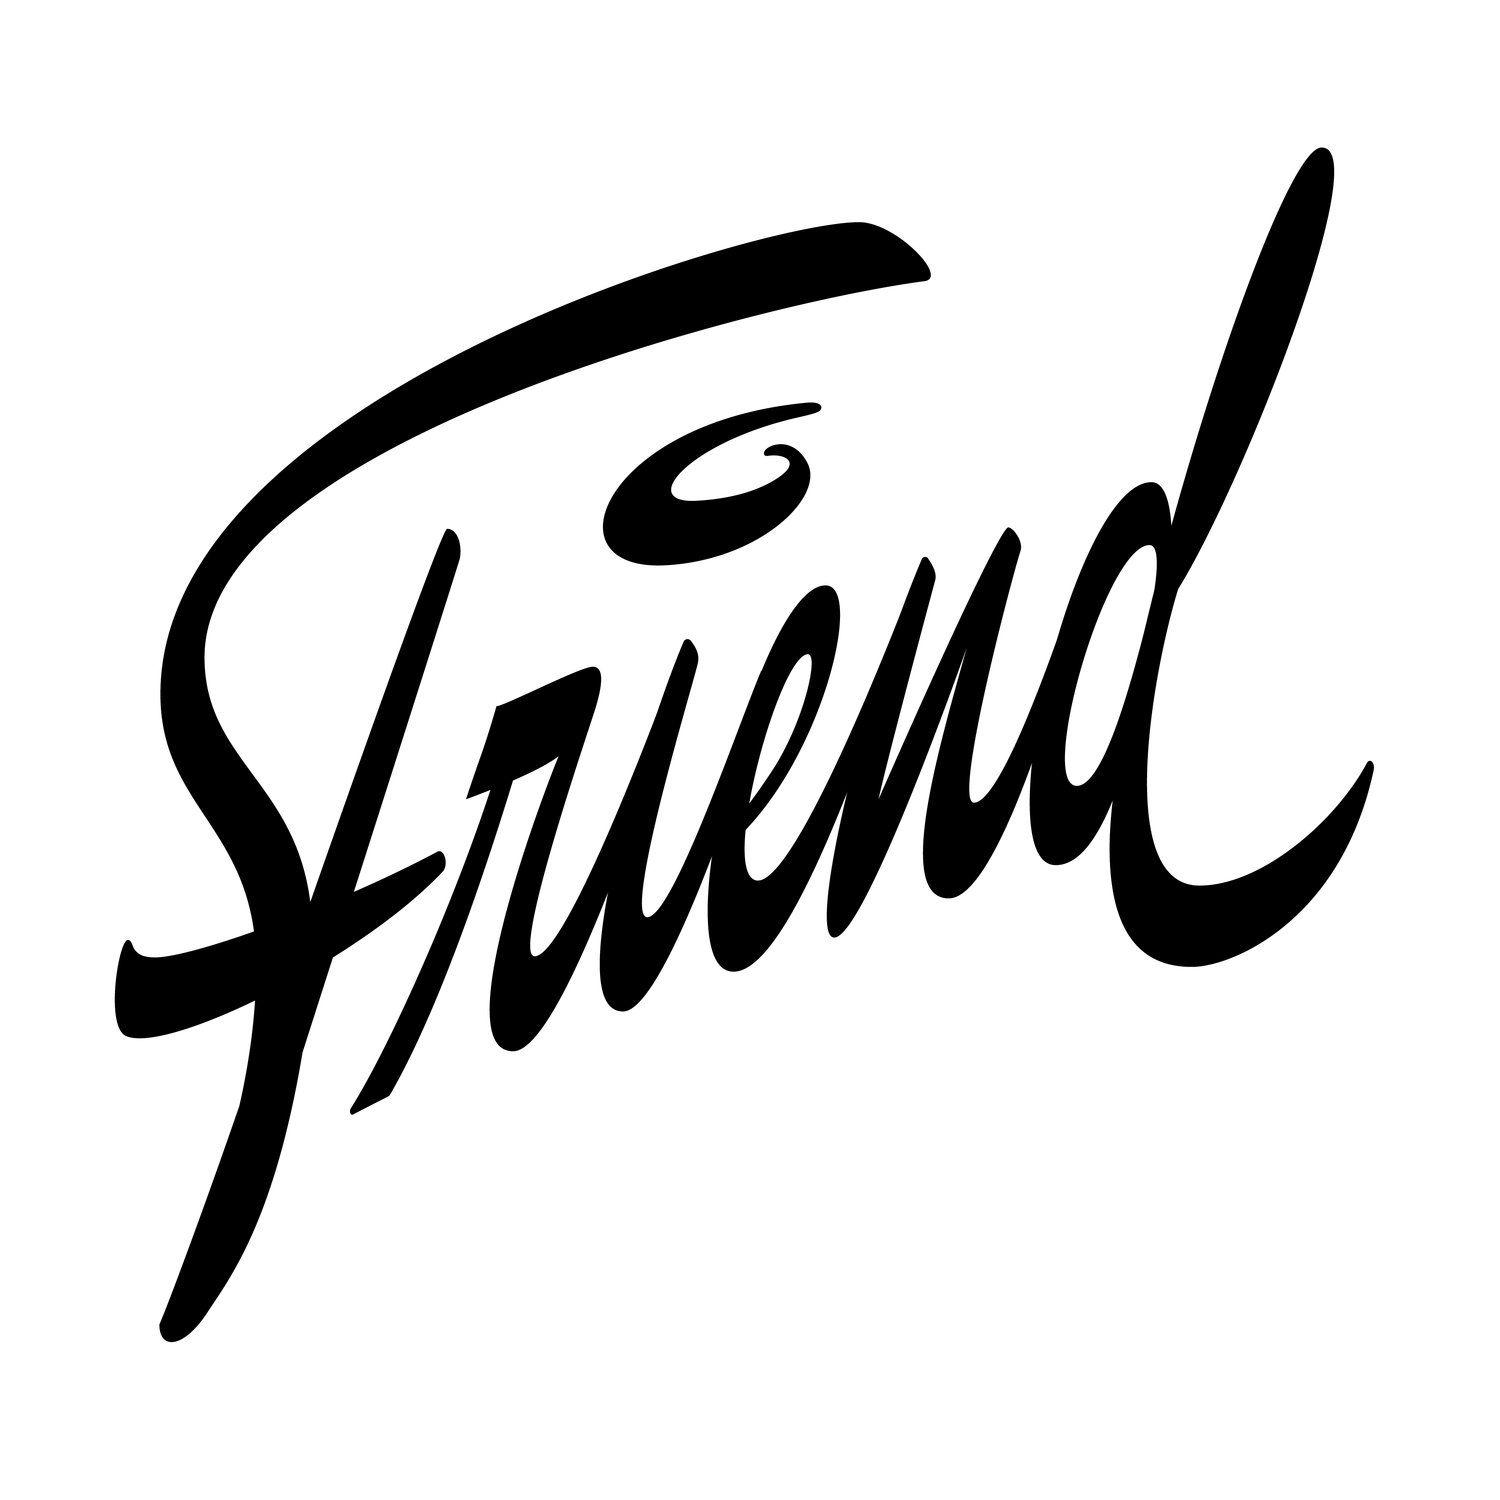 Friend Logo - The Design Studio of Jeremy Friend